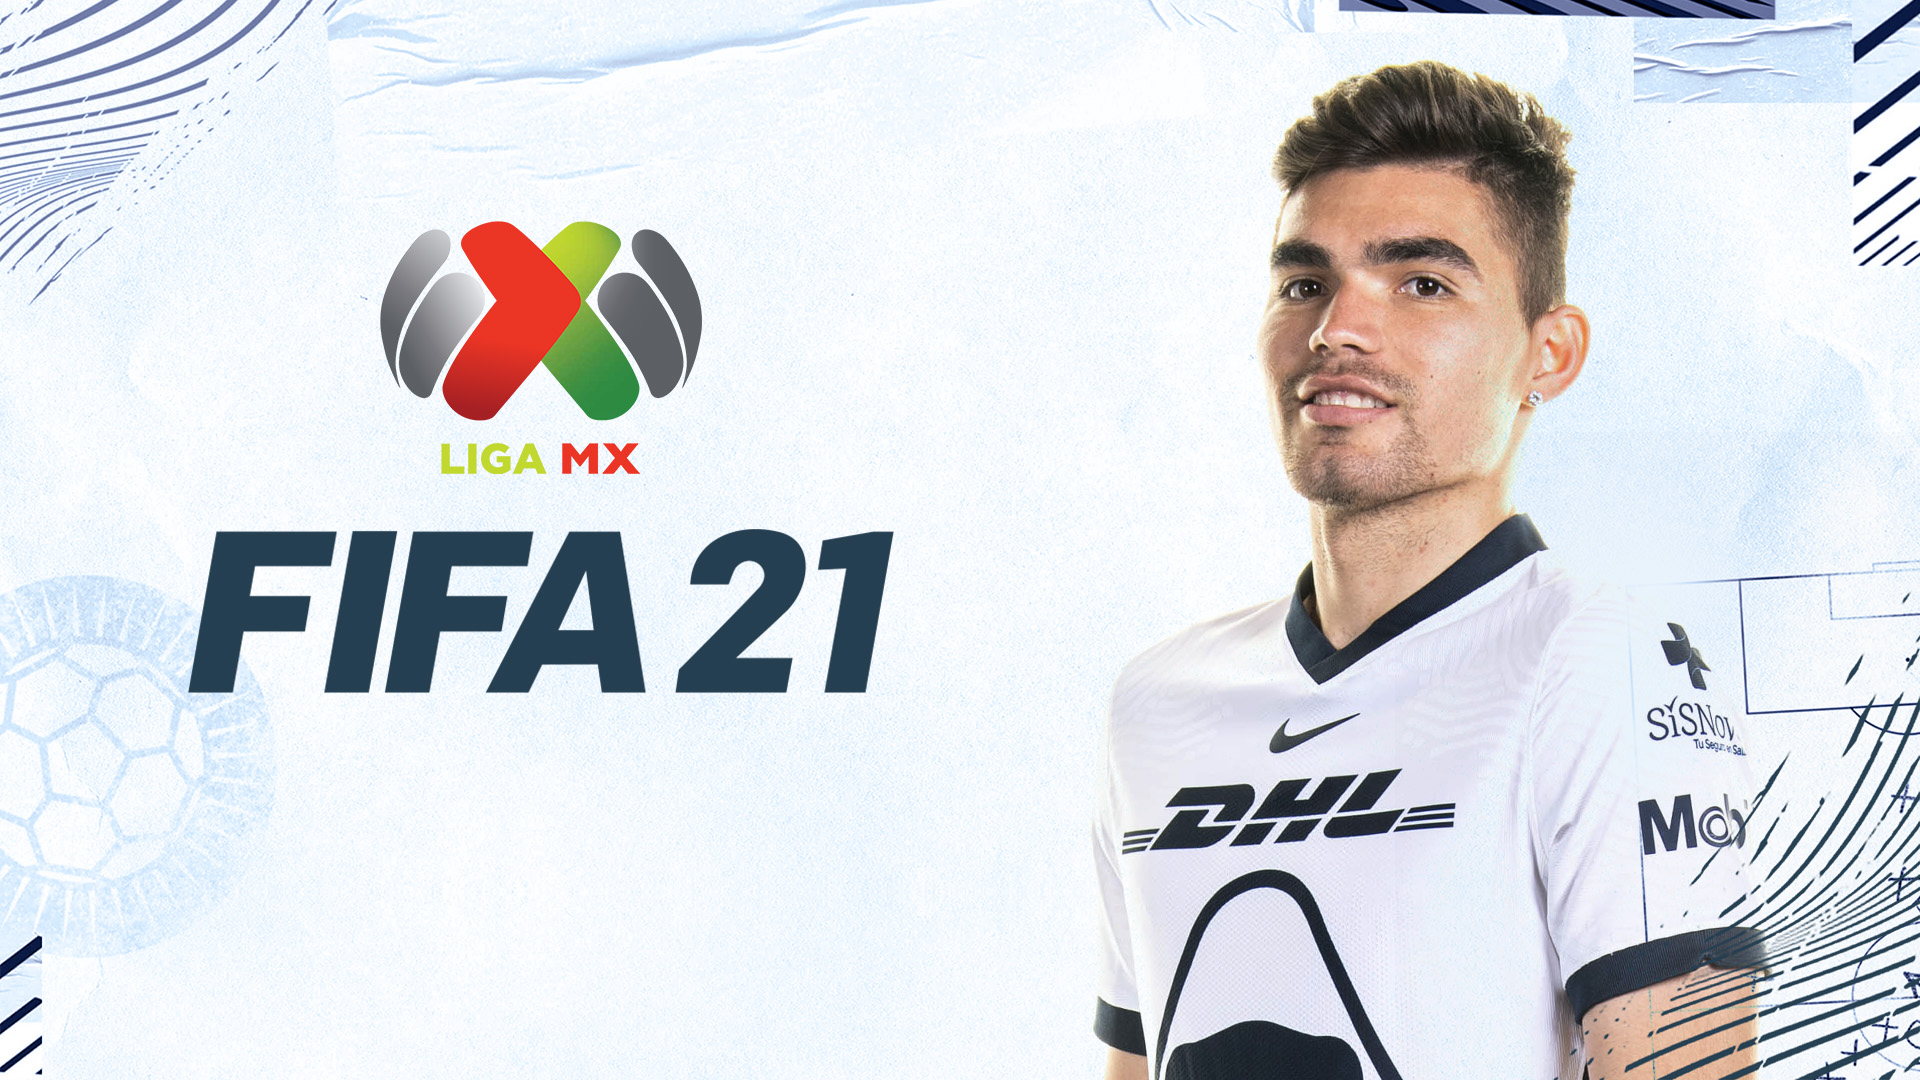 LIGA FIFA 21